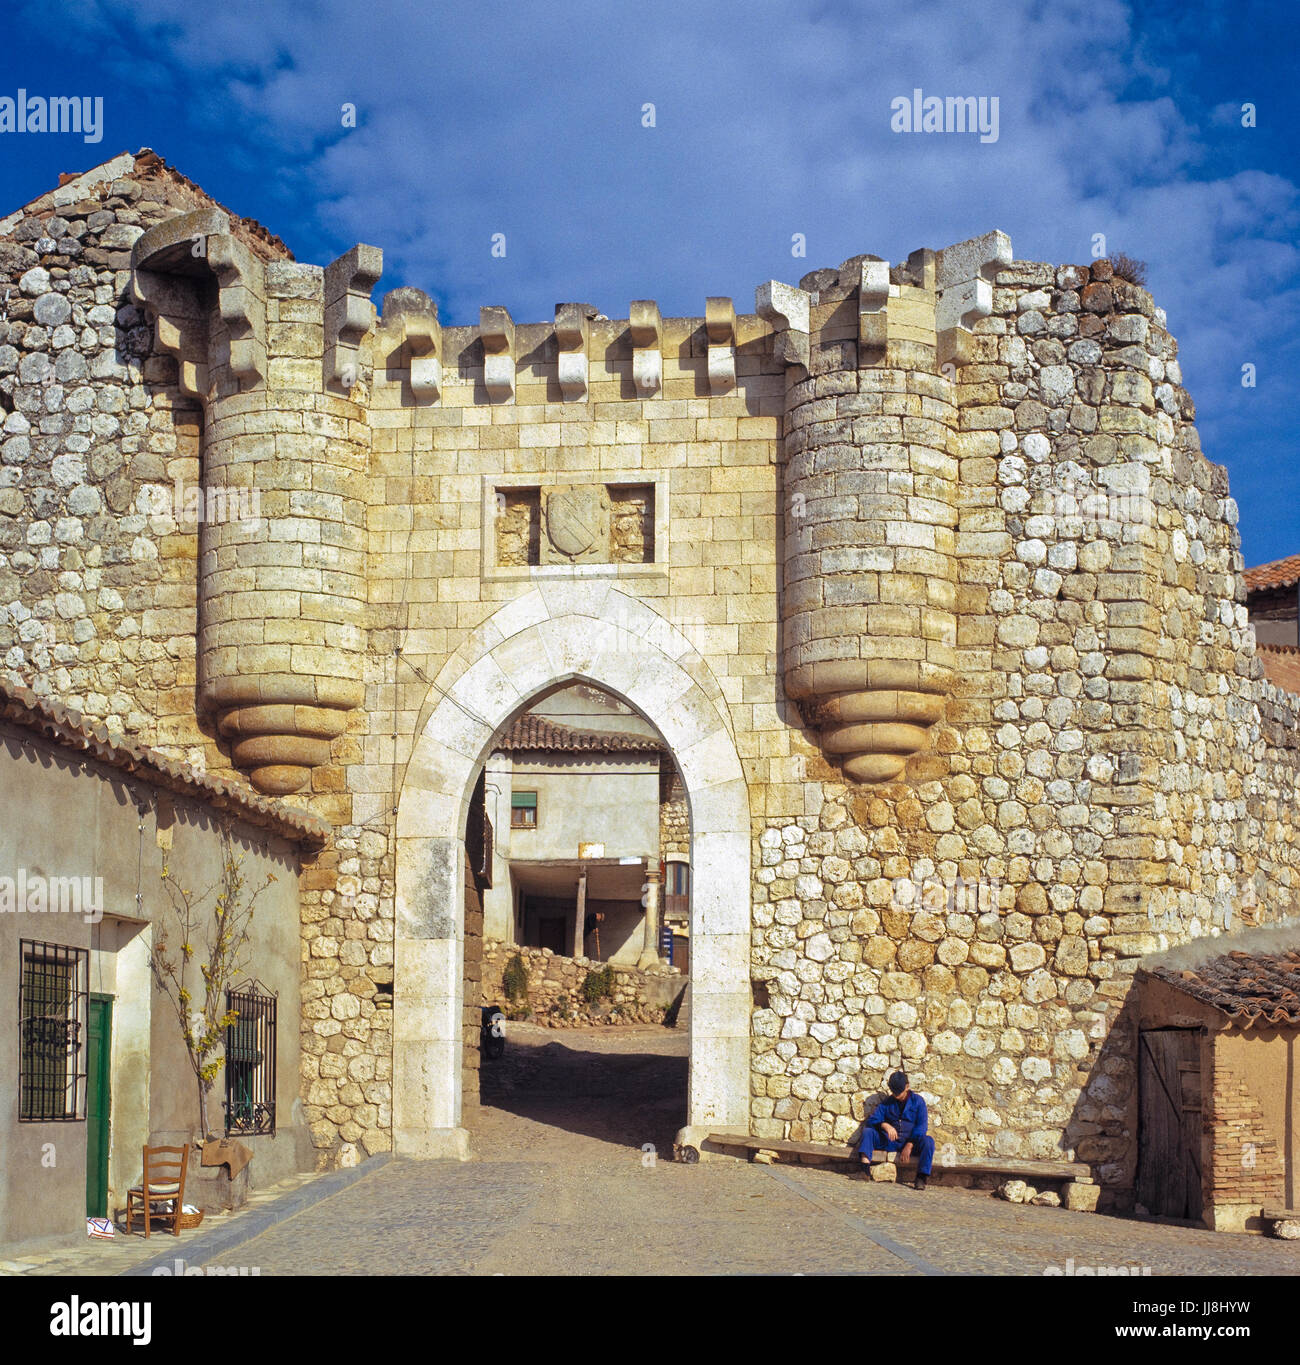 Ancienne porte de la ville castillane. Hita (Guadalajara) Espagne Hita est une municipalité dans la comarca de La Alcarria, dans la province de Guadalajara (province), Sp Banque D'Images